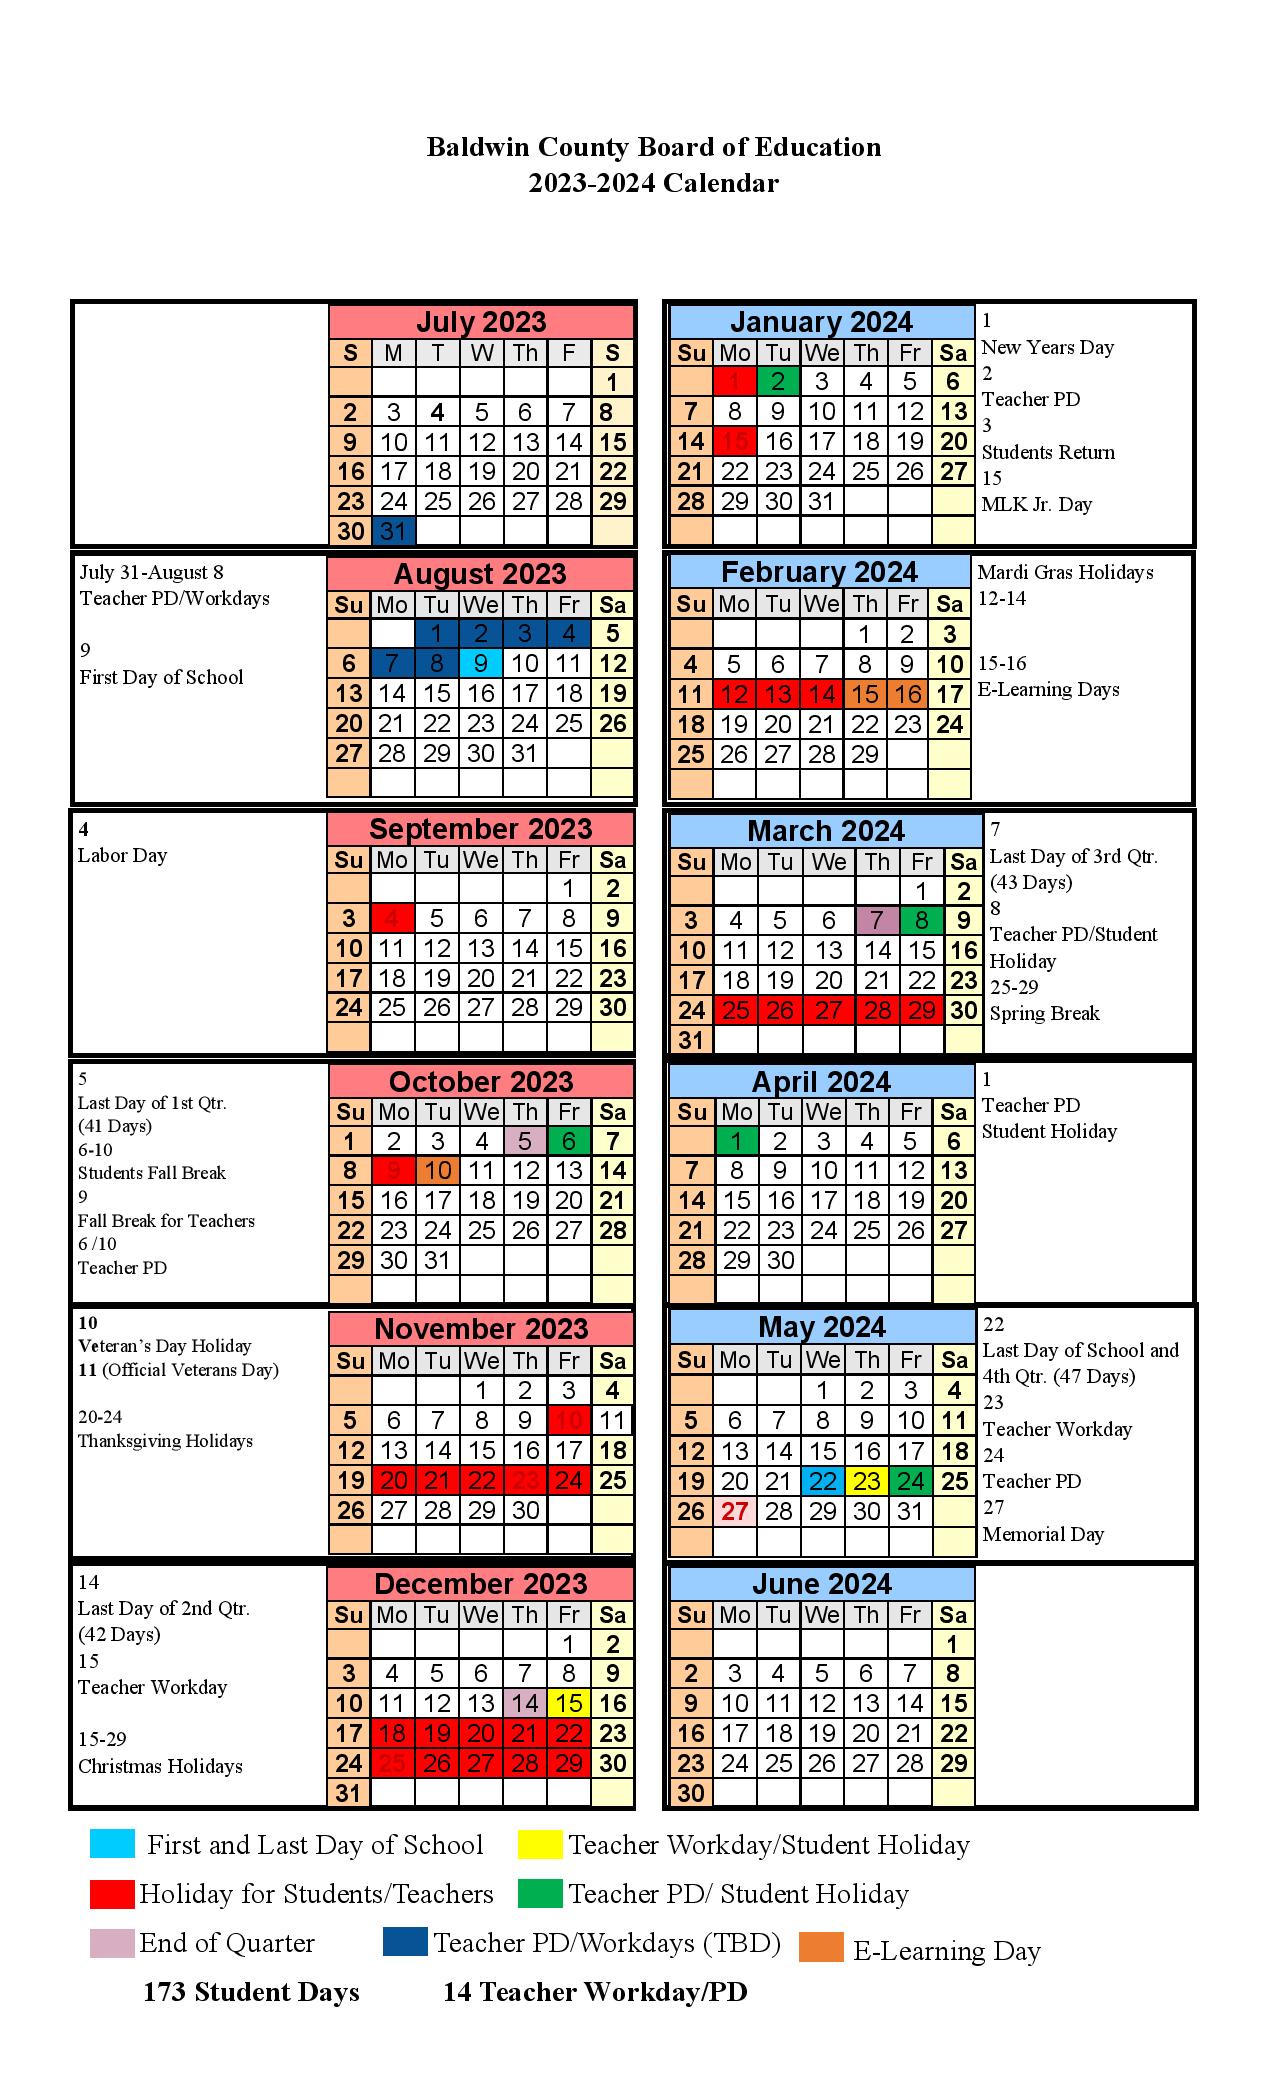 Baldwin County Public Schools Calendar 2023-2024 in PDF